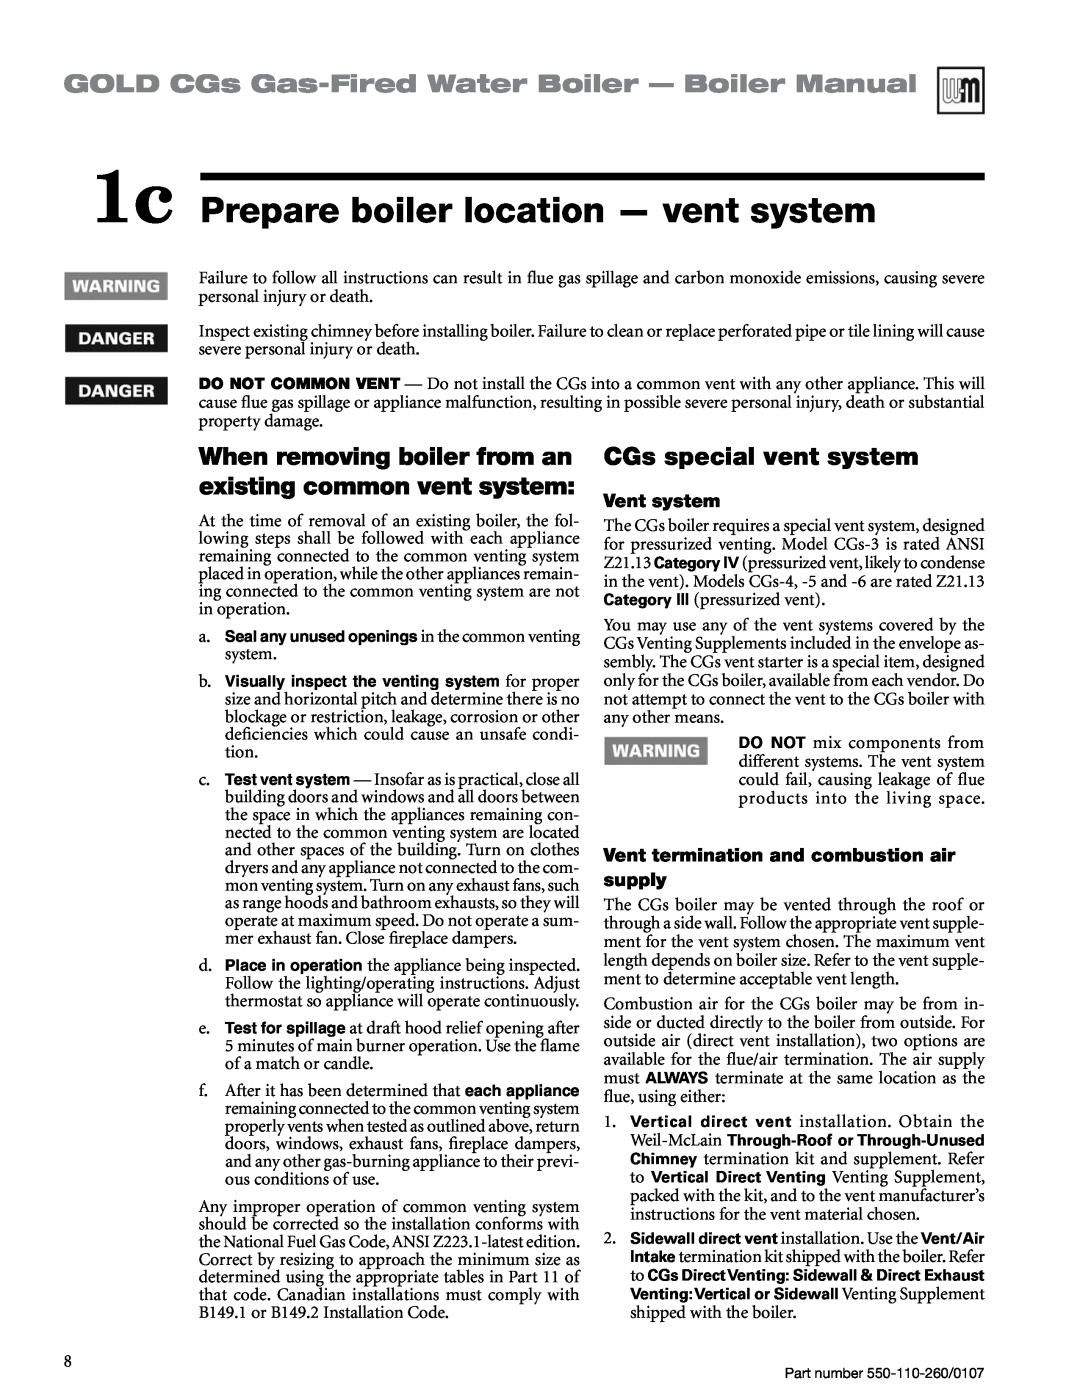 Weil-McLain 550-110-260/0107 manual 1c Prepare boiler location — vent system, CGs special vent system, Vent system 